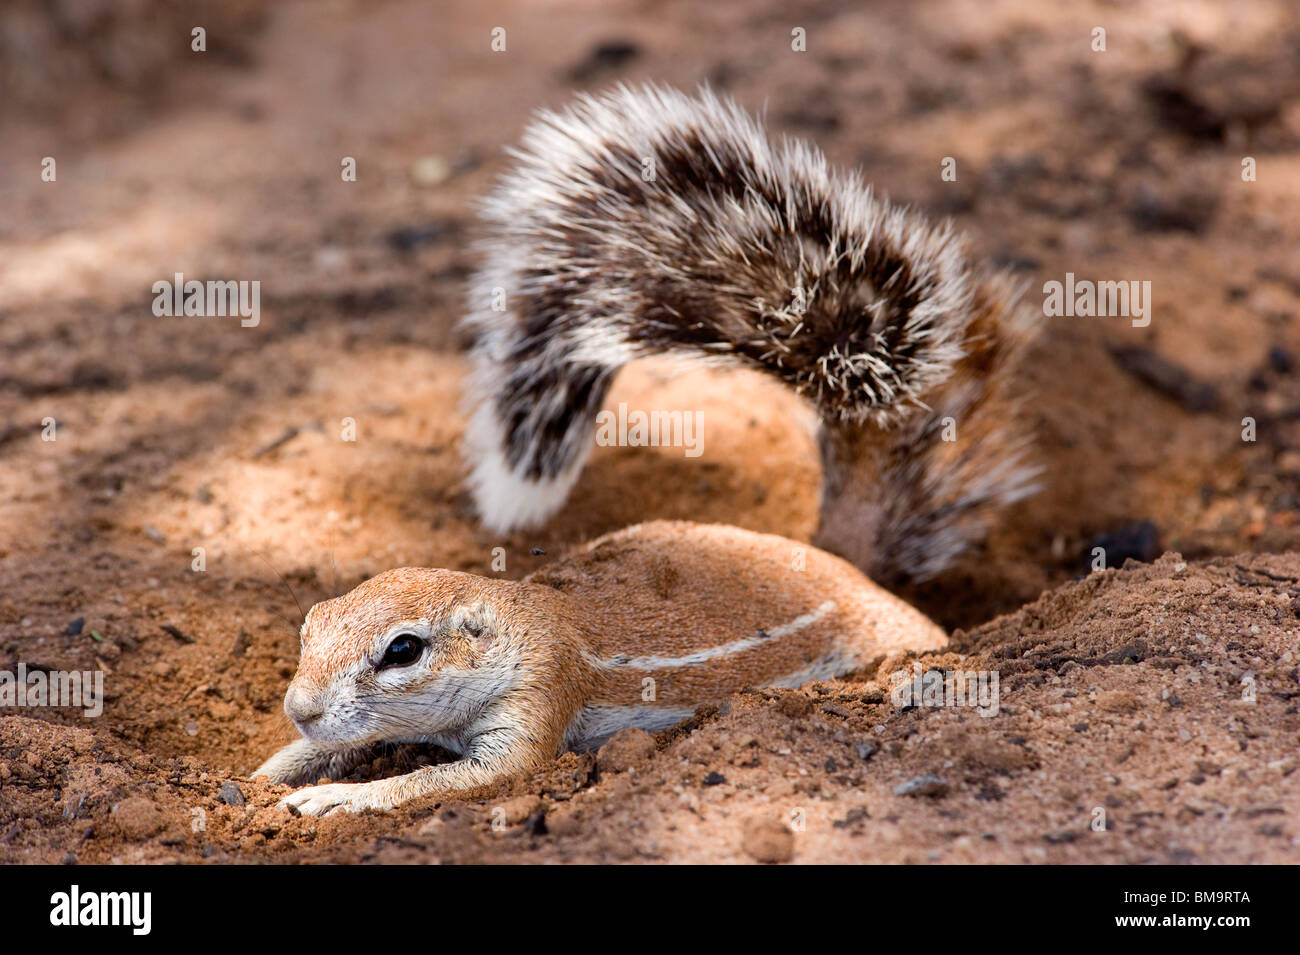 Terra africana scoiattolo scavando Foto Stock